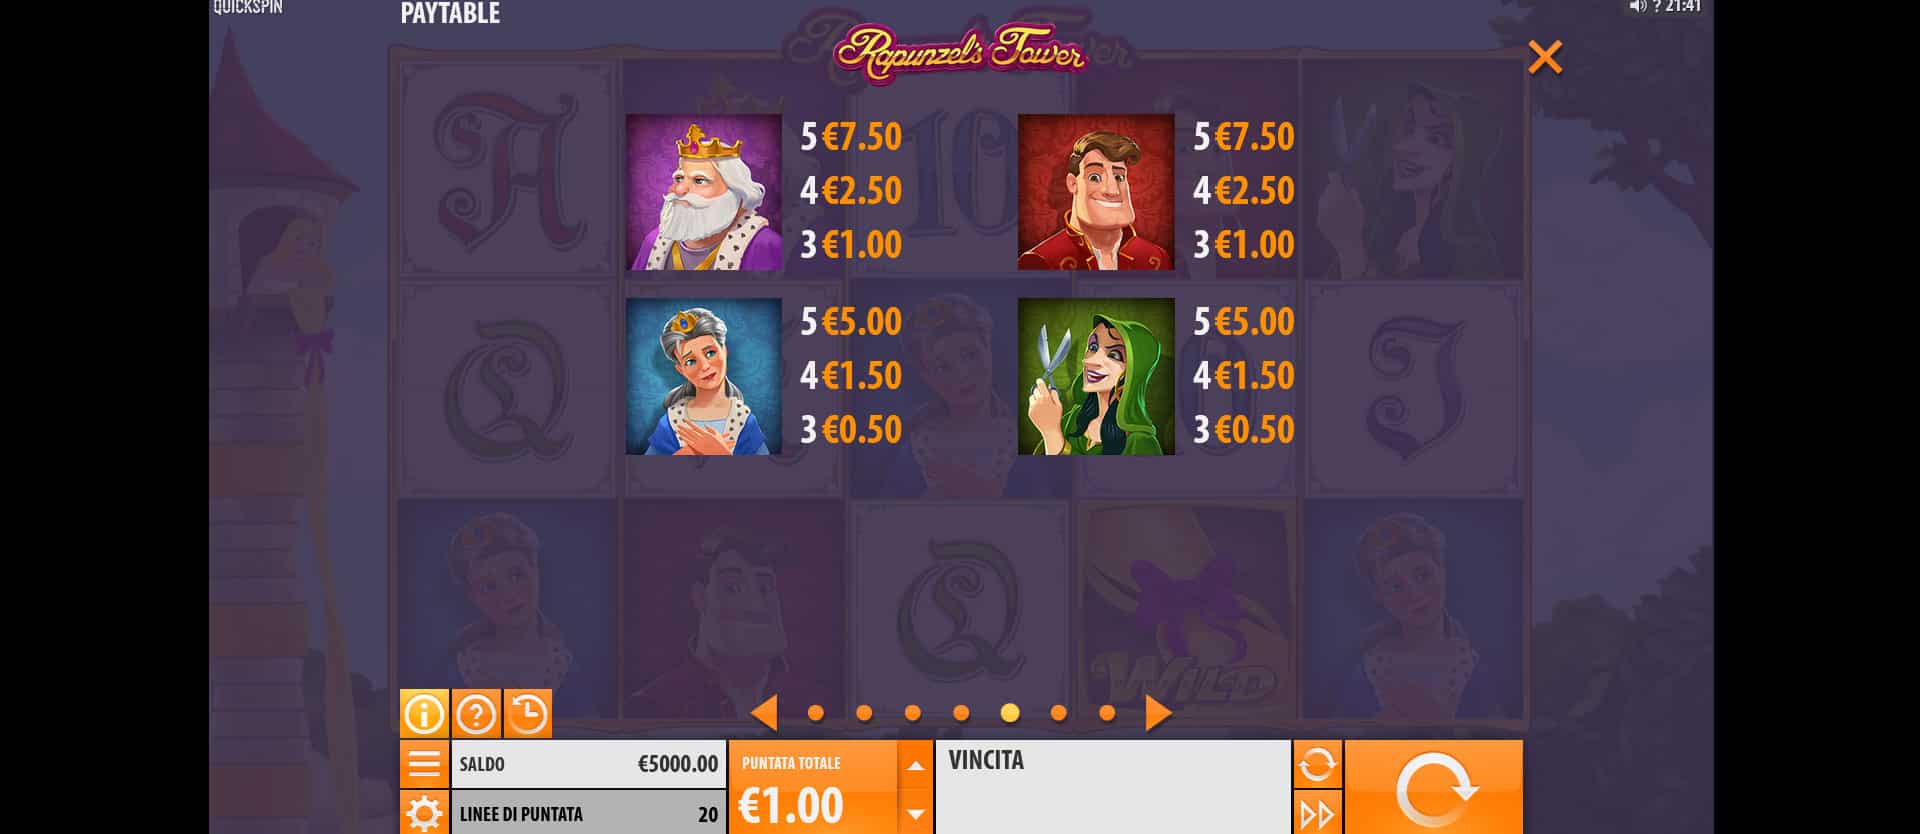 simboli della slot online rapunzel's tower